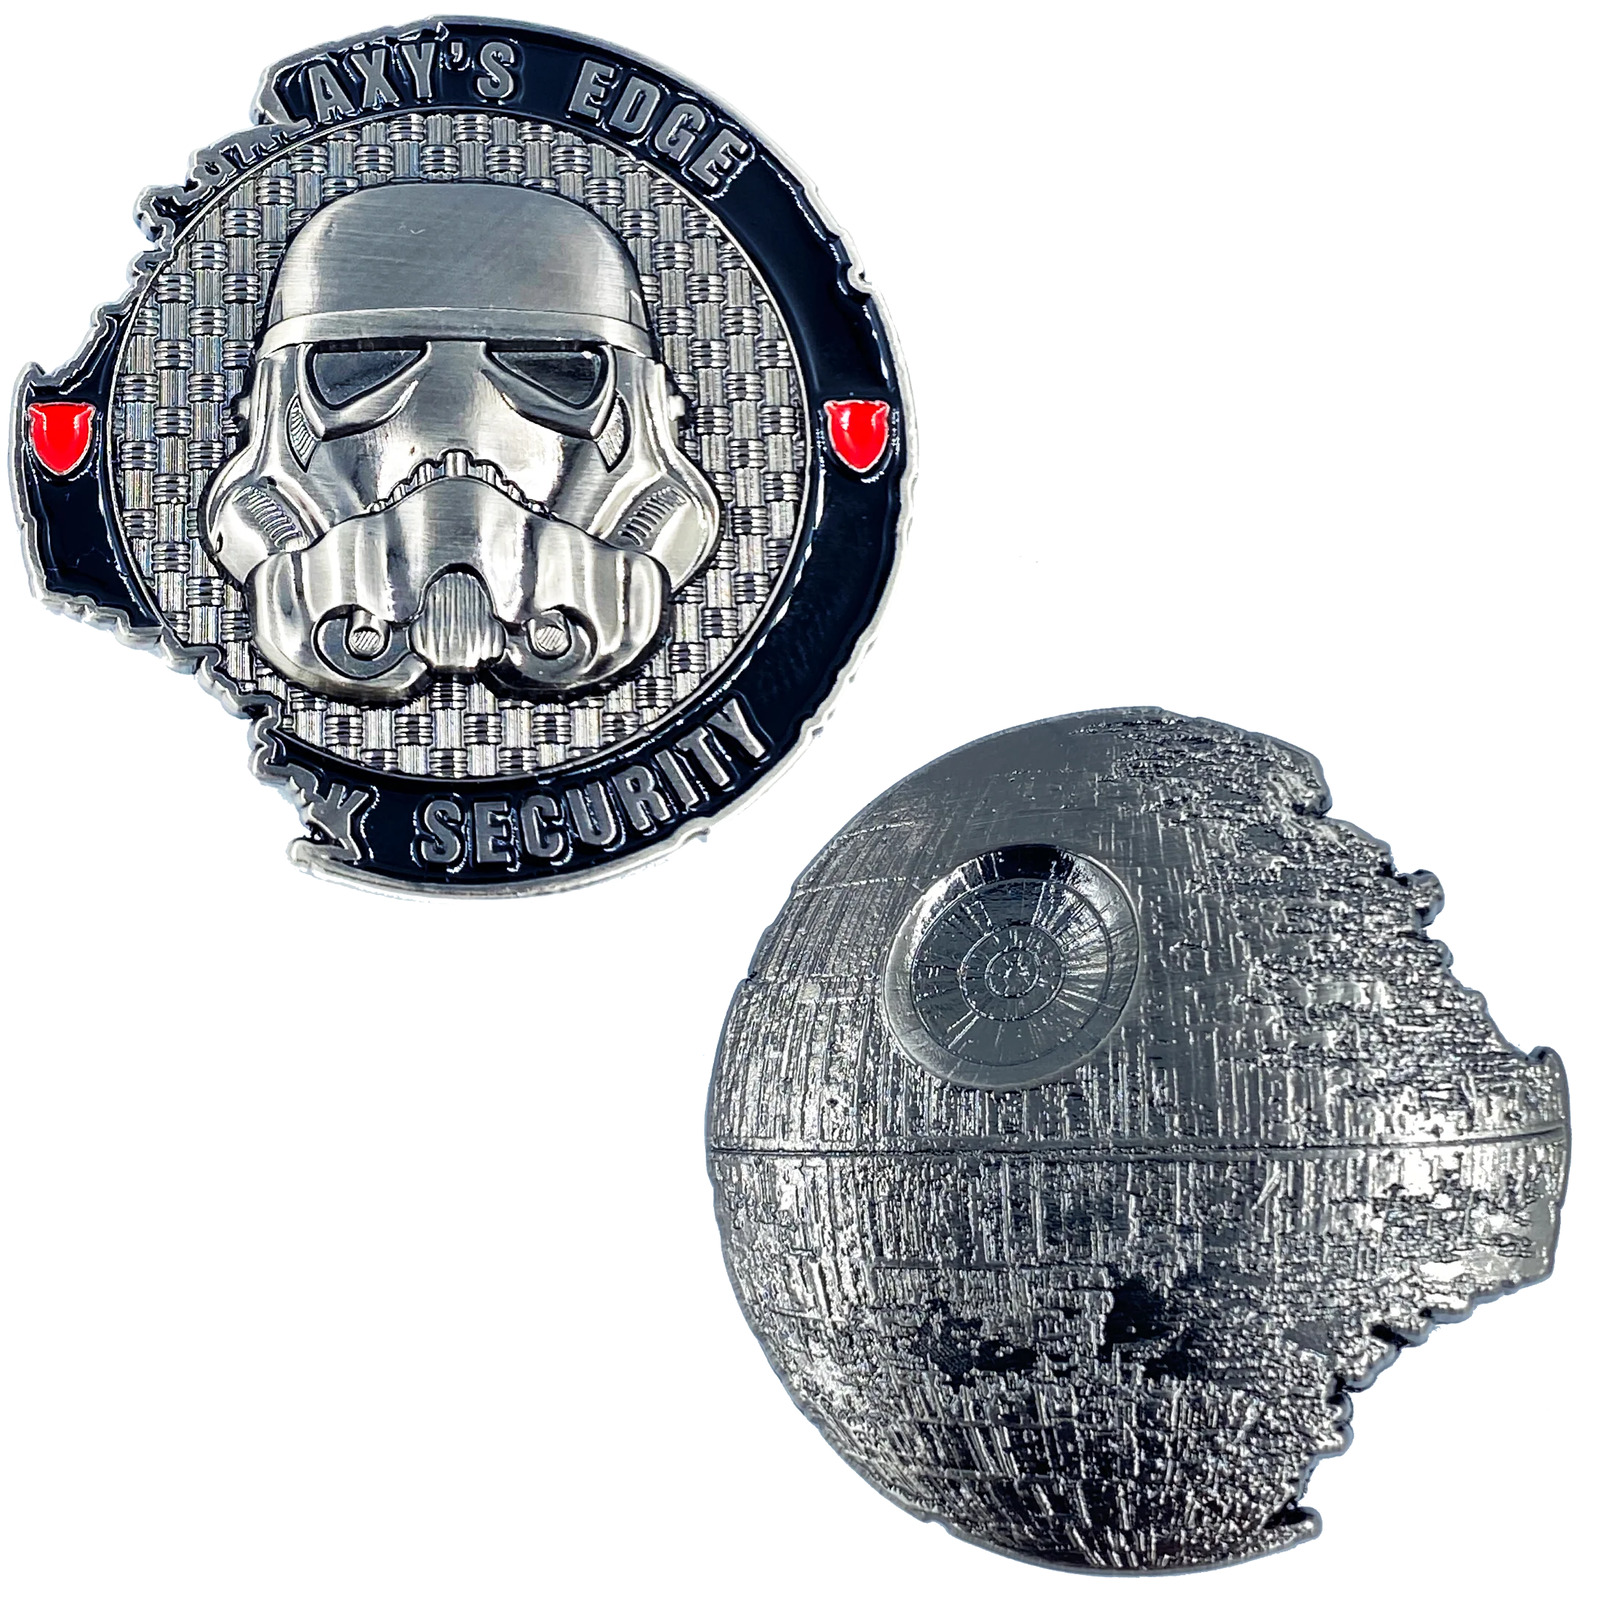 DL10-07 Death Star Galaxy's Edge Park Security Challenge Coin Storm Trooper Rogu